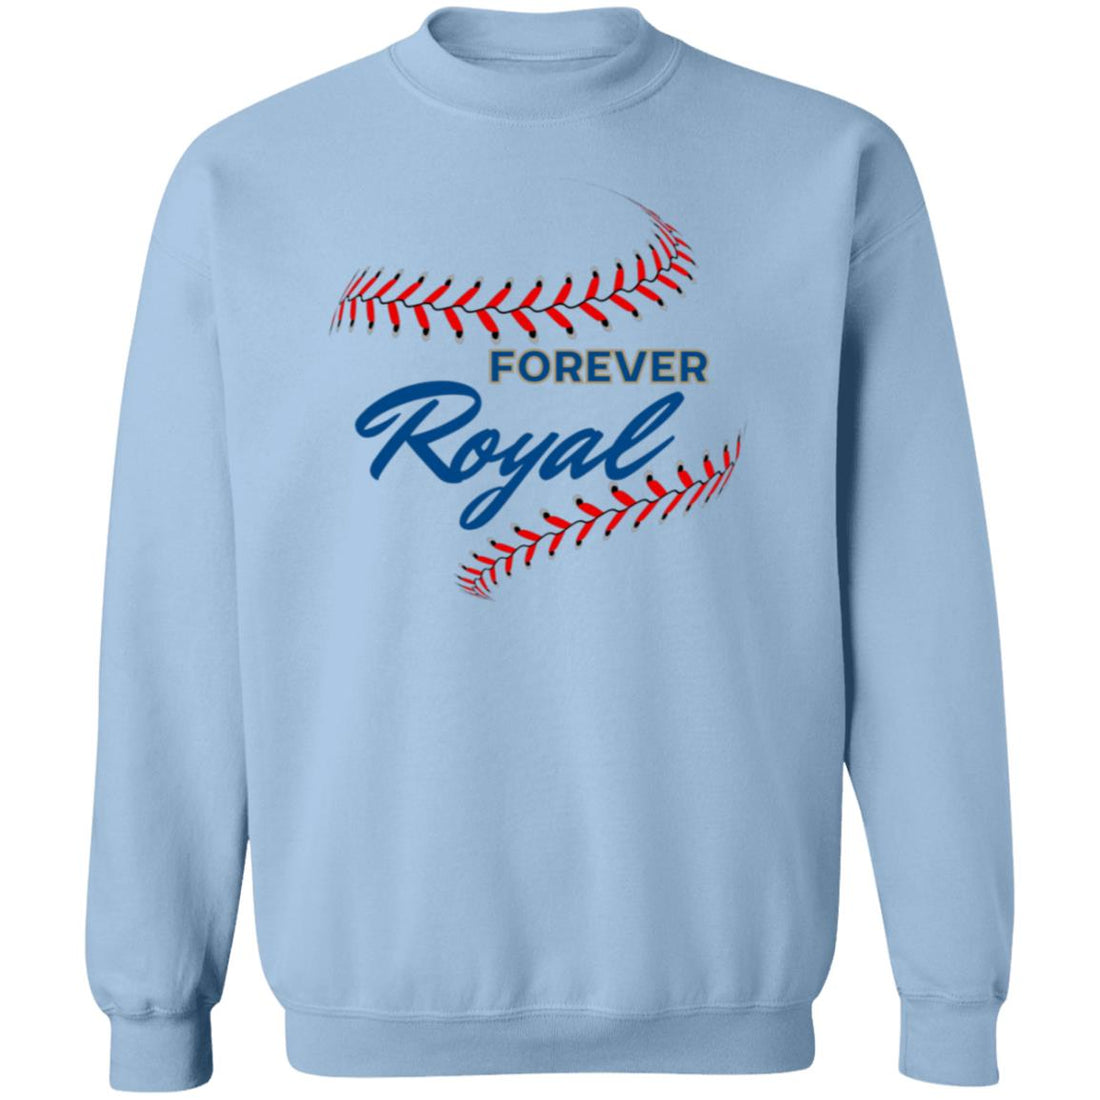 Forever Royal Pullover Sweatshirt - Sweatshirts - Positively Sassy - Forever Royal Pullover Sweatshirt